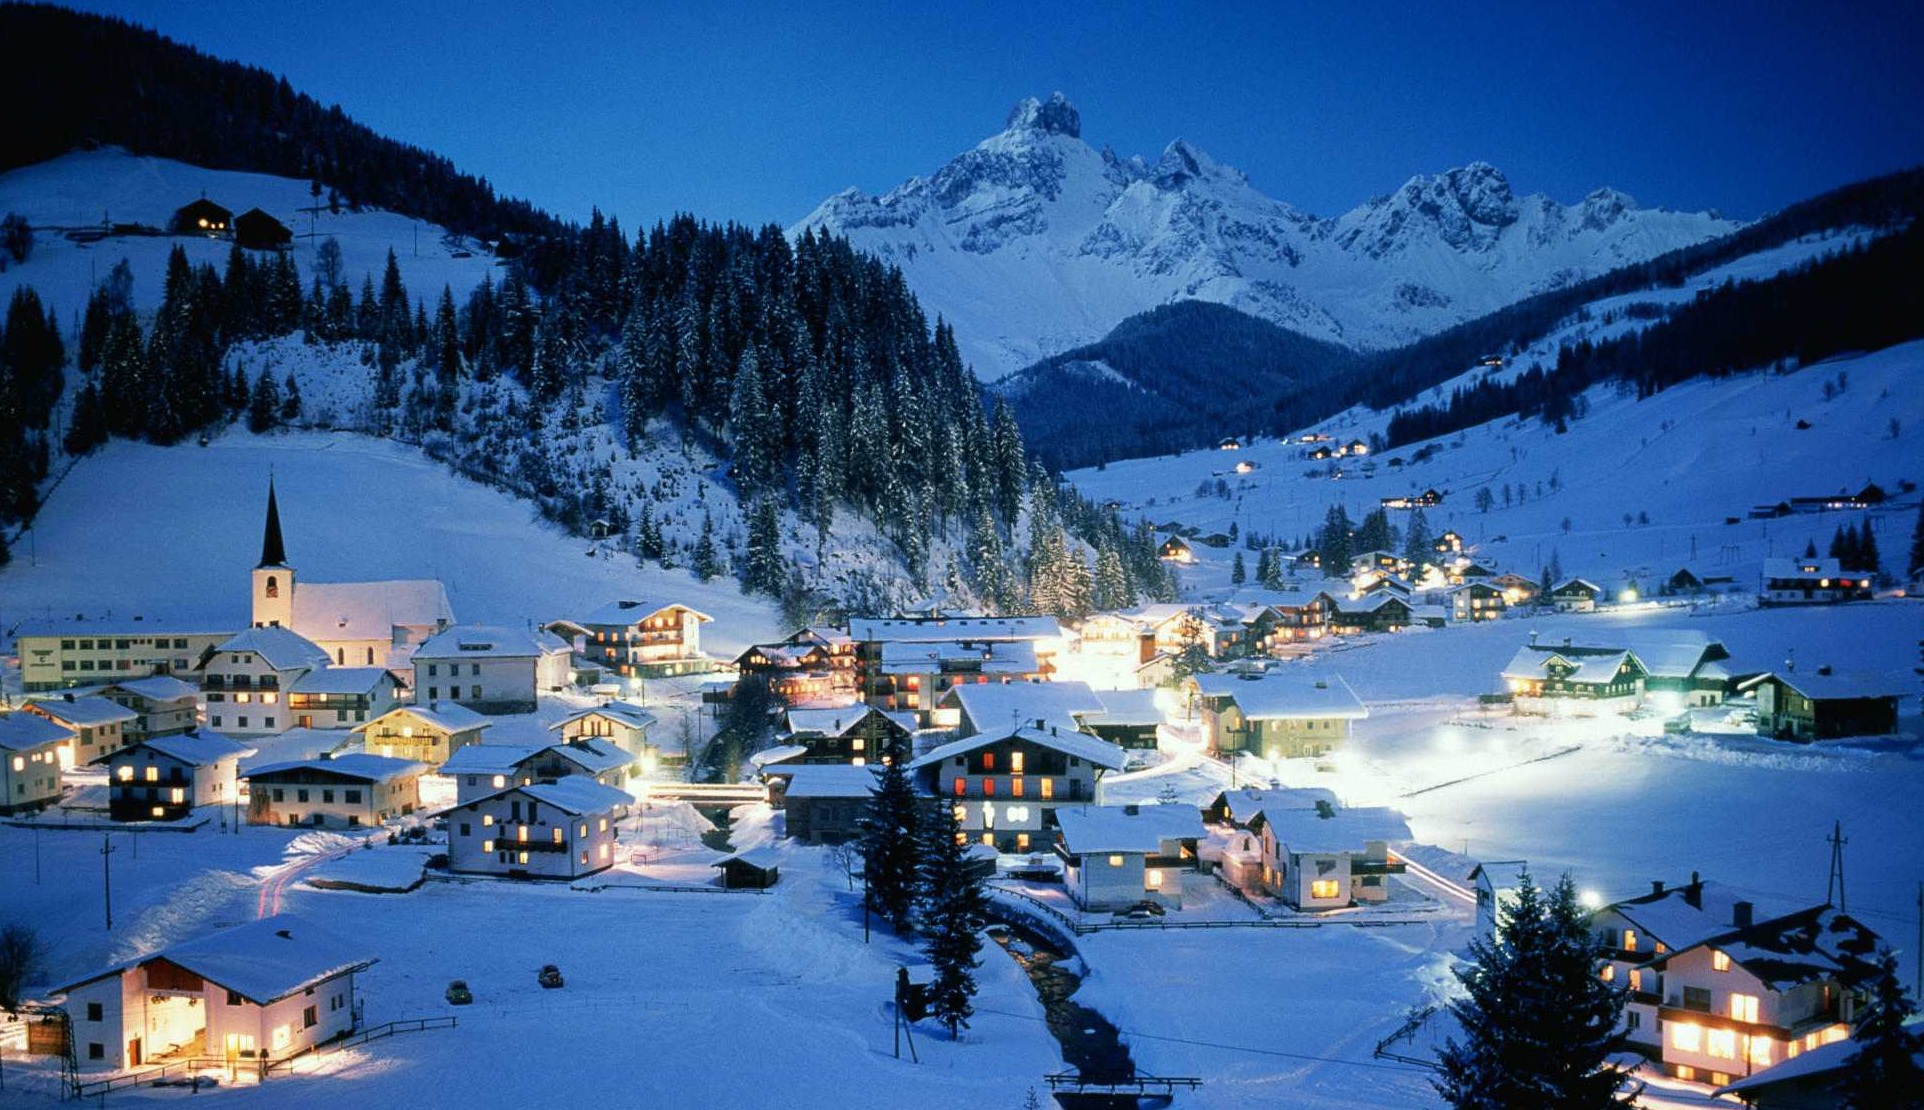 Ski Resort Of Ischgl Austria Wallpaper And Image